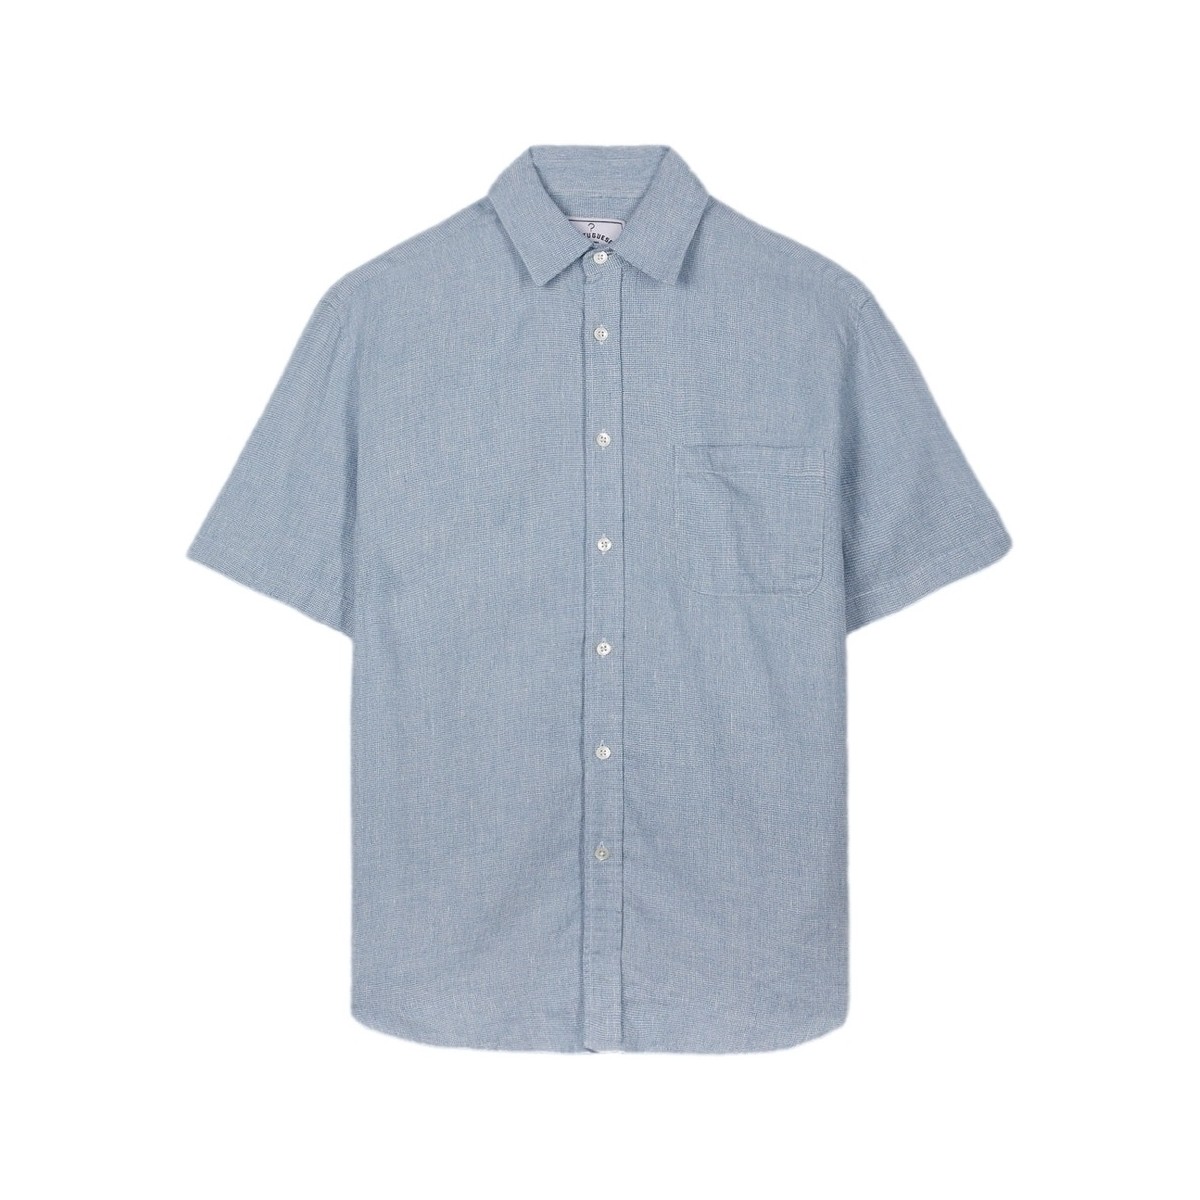 textil Herr Långärmade skjortor Portuguese Flannel New Highline Shirt Blå